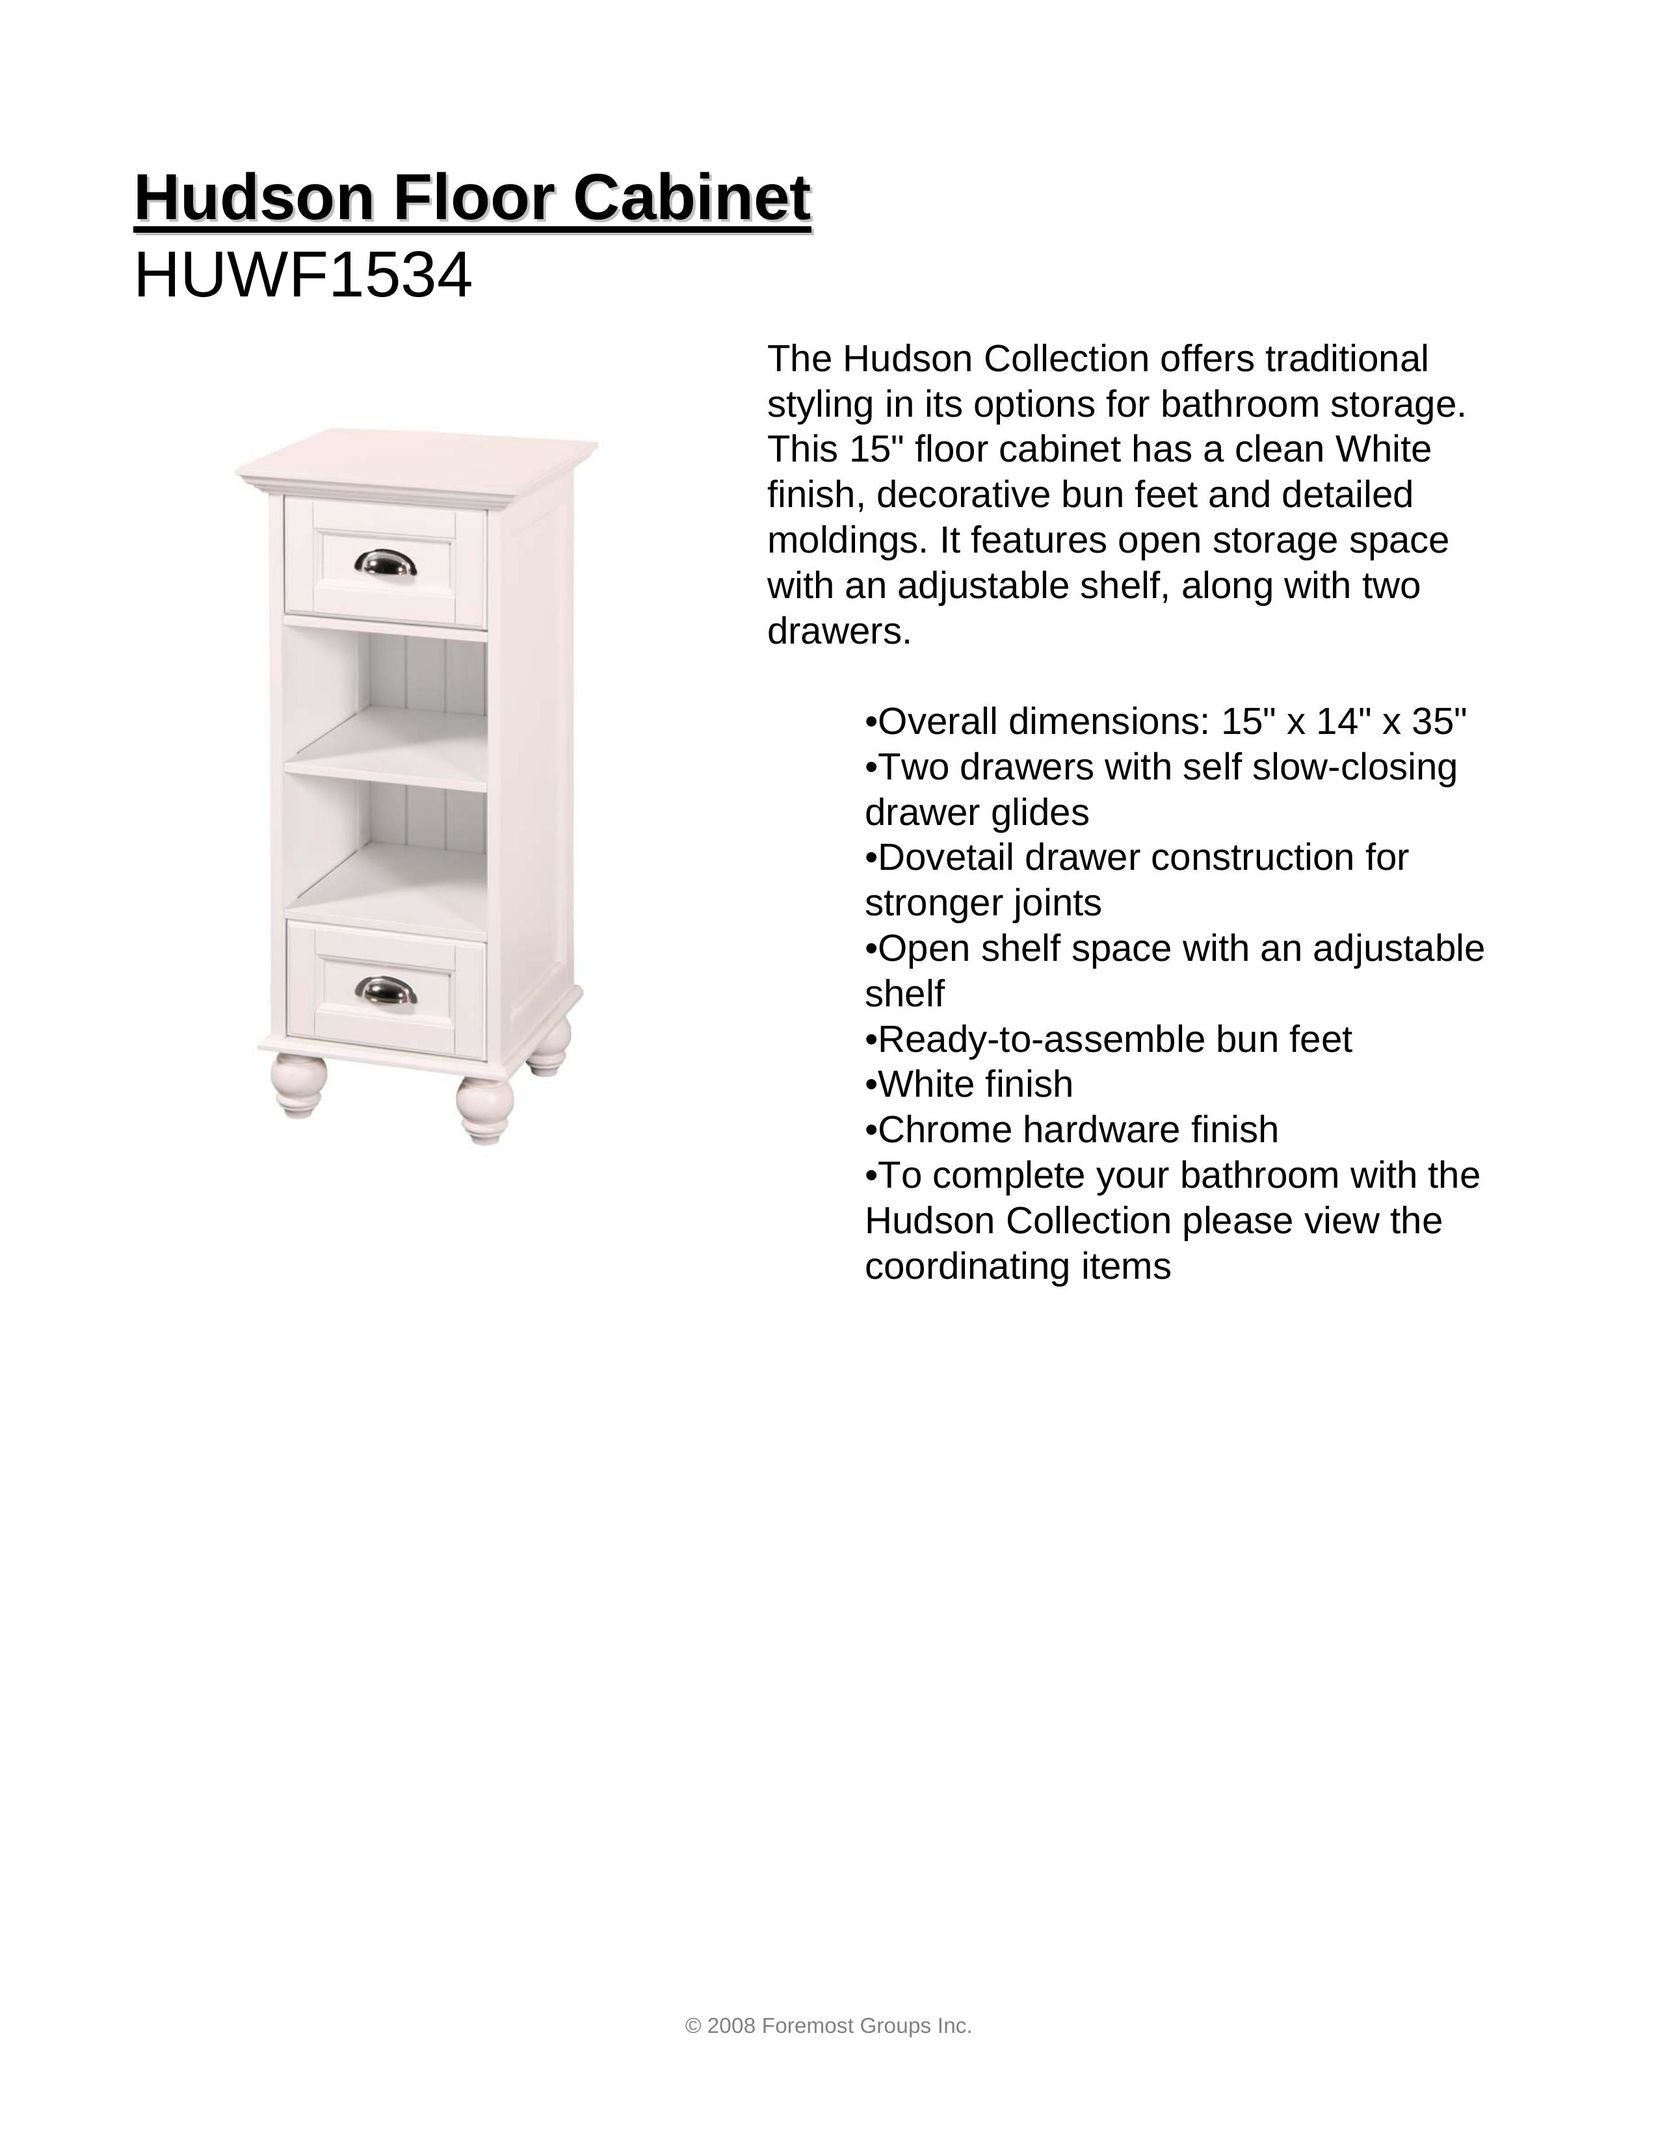 Hudson Sales & Engineering HUWS2412 Indoor Furnishings User Manual